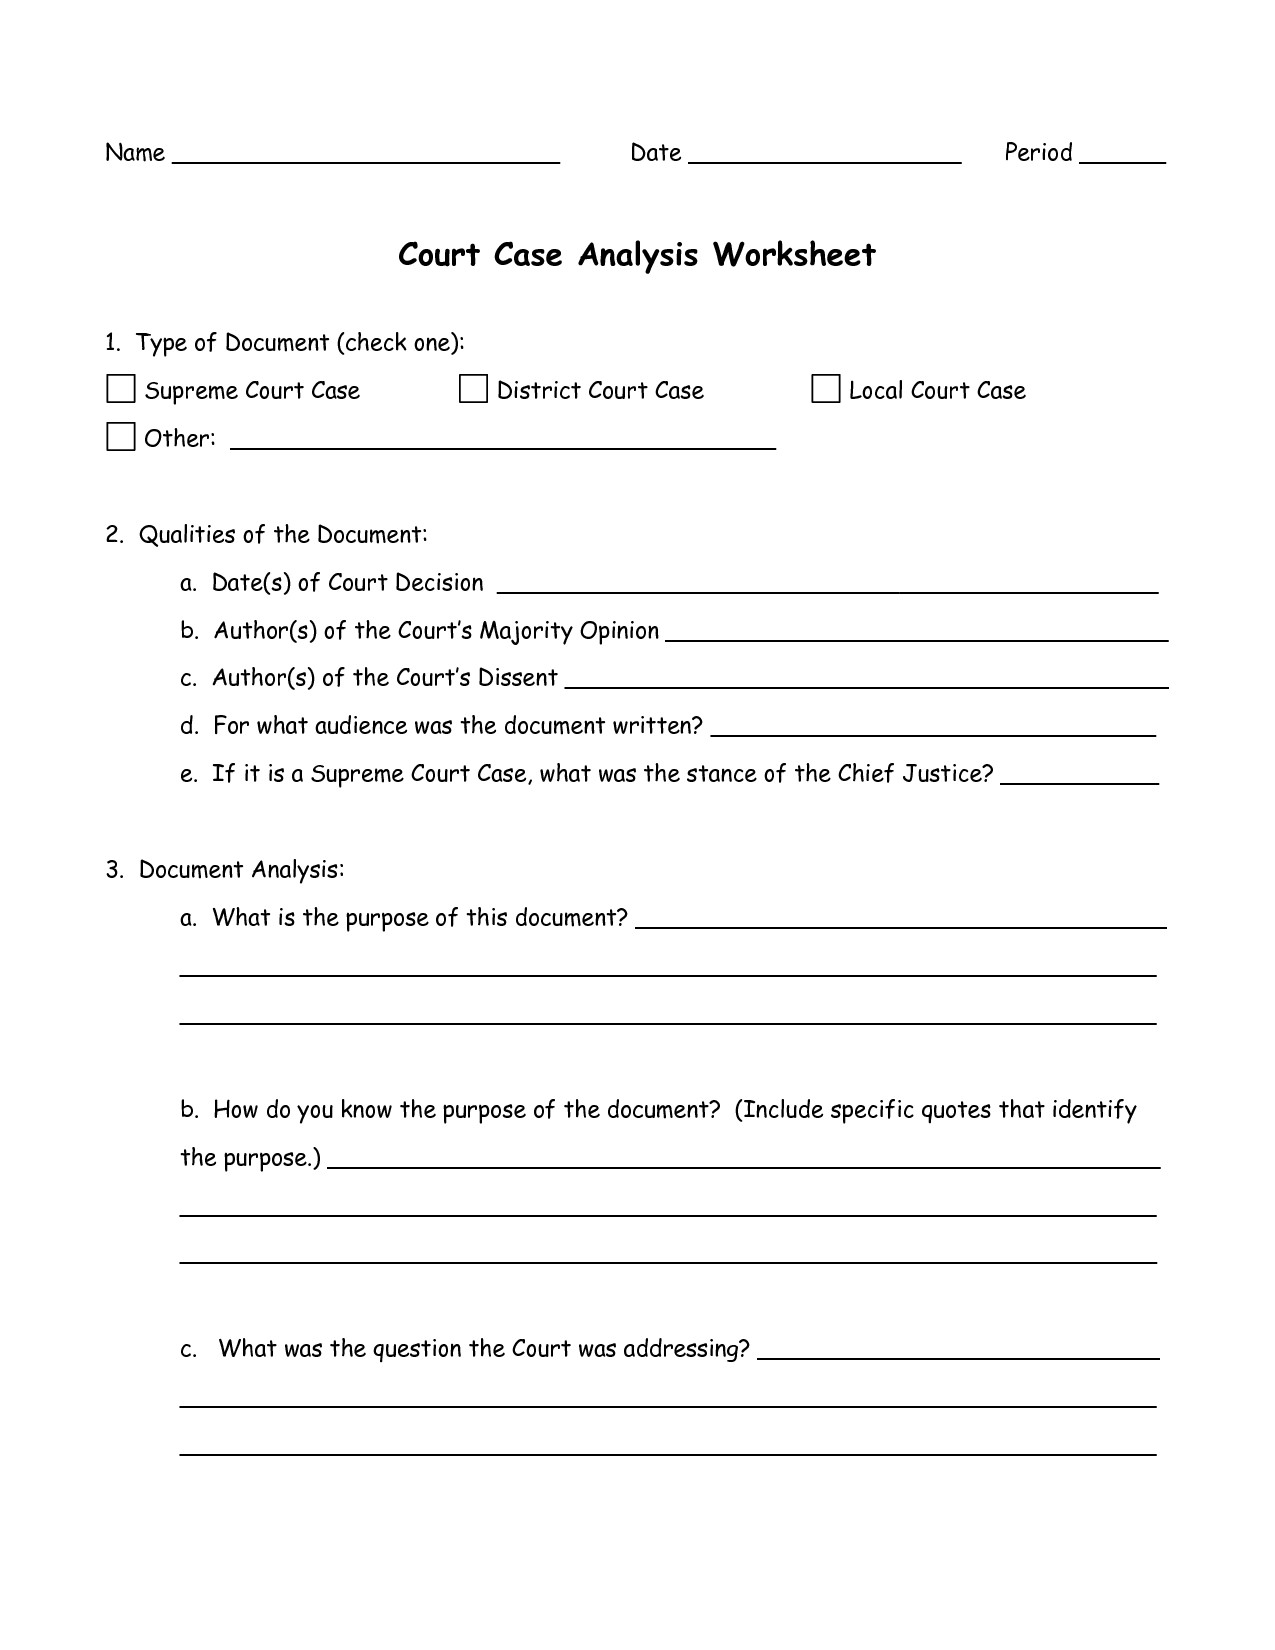 Written Document Analysis Worksheet Answers Supreme Court Cases Matching Worksheet